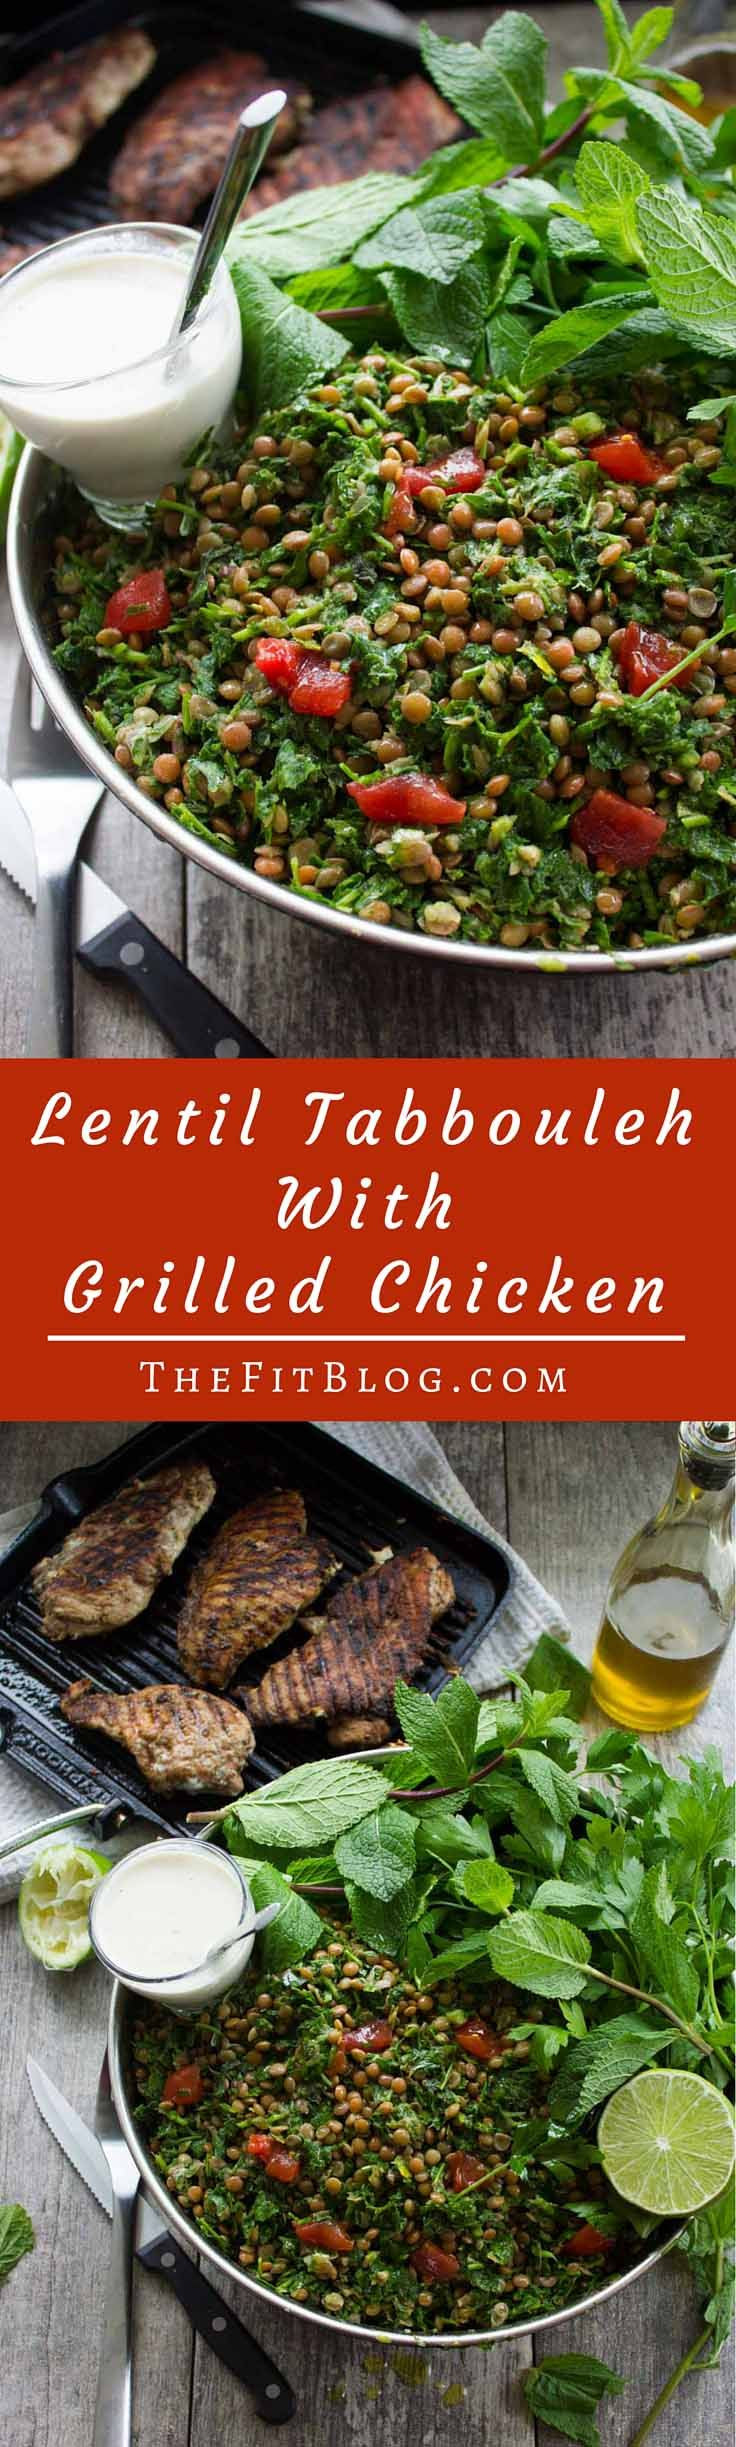 Diabetic Grilled Chicken Recipes
 Lentil Tabbouleh with Grilled Chicken Recipe